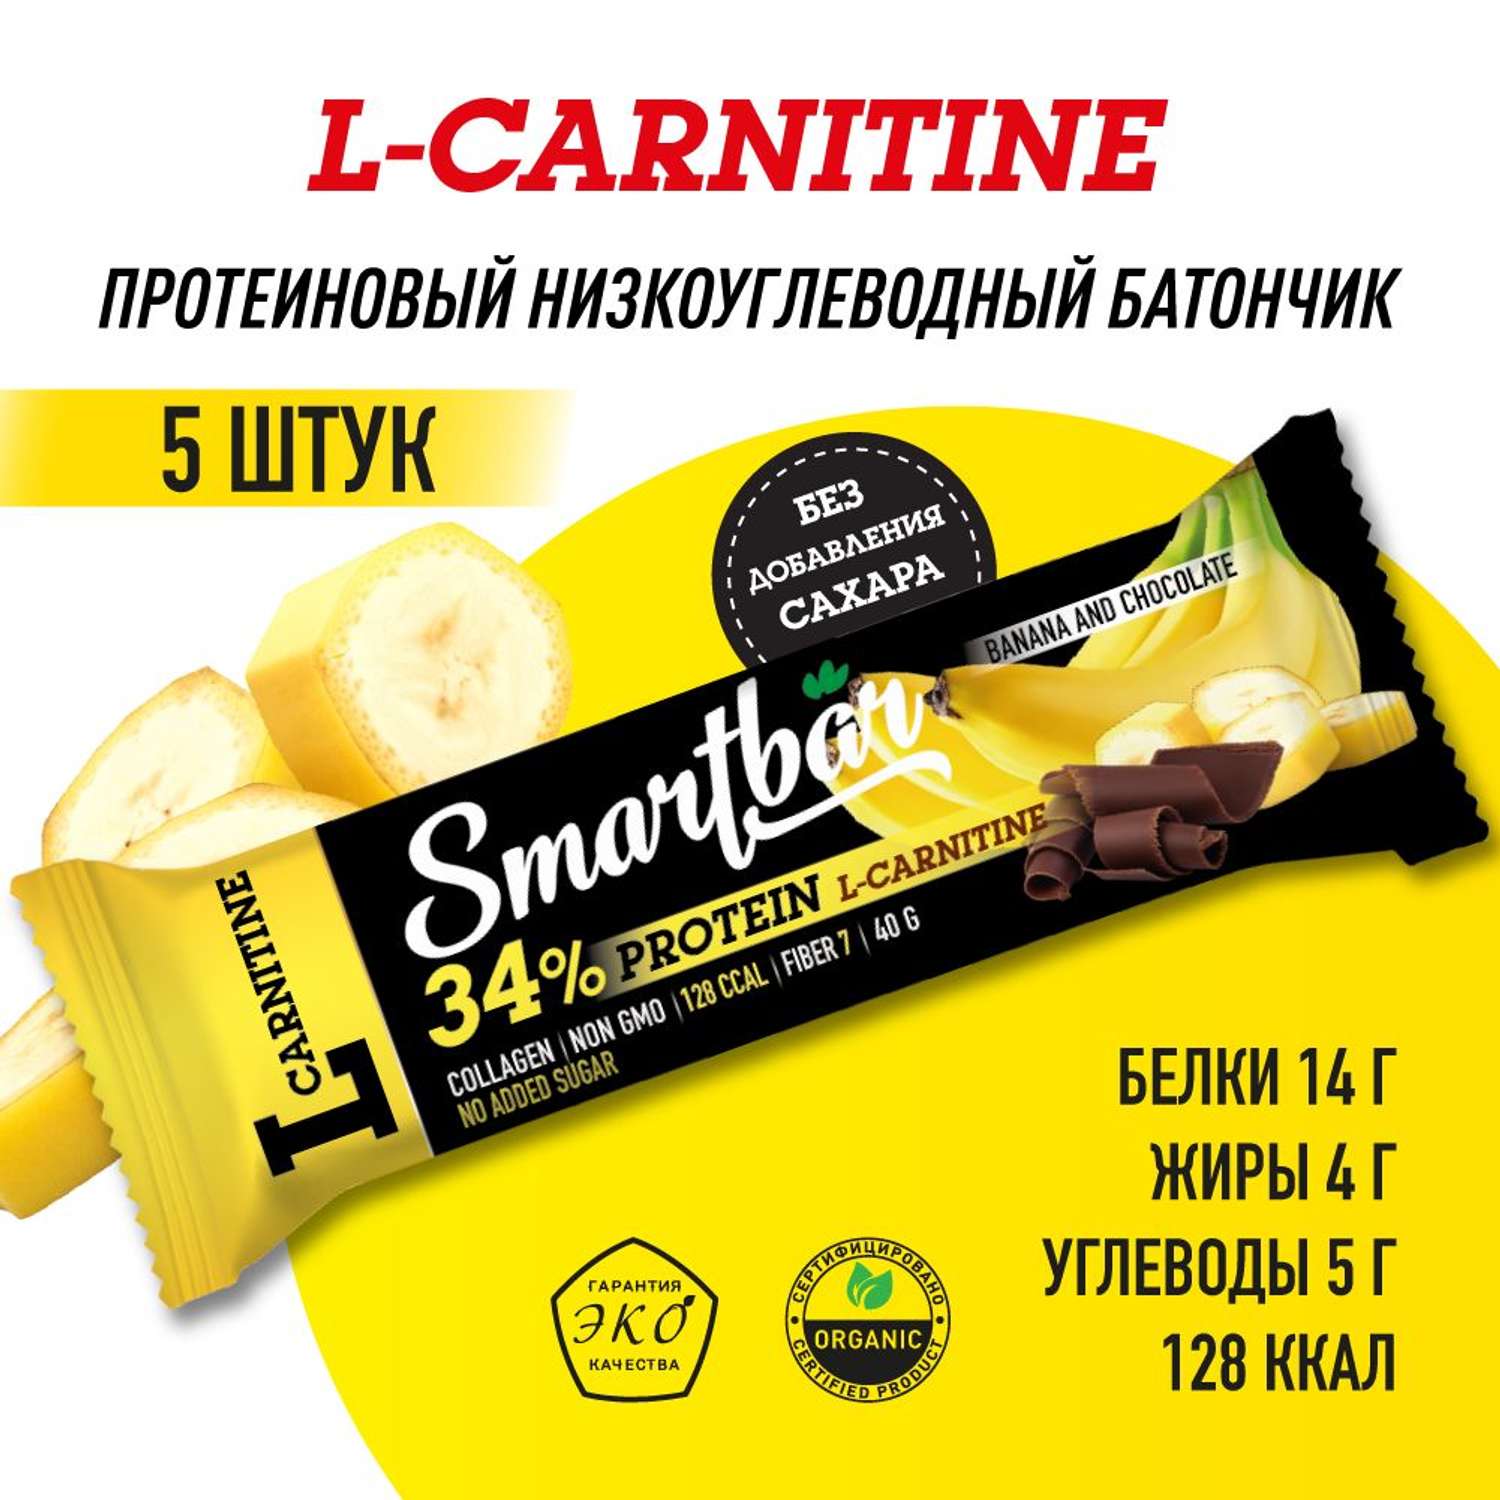 Протеиновые батончики Smartbar Банан-шоколад с Л-карнитином 5 шт.х 40г - фото 2